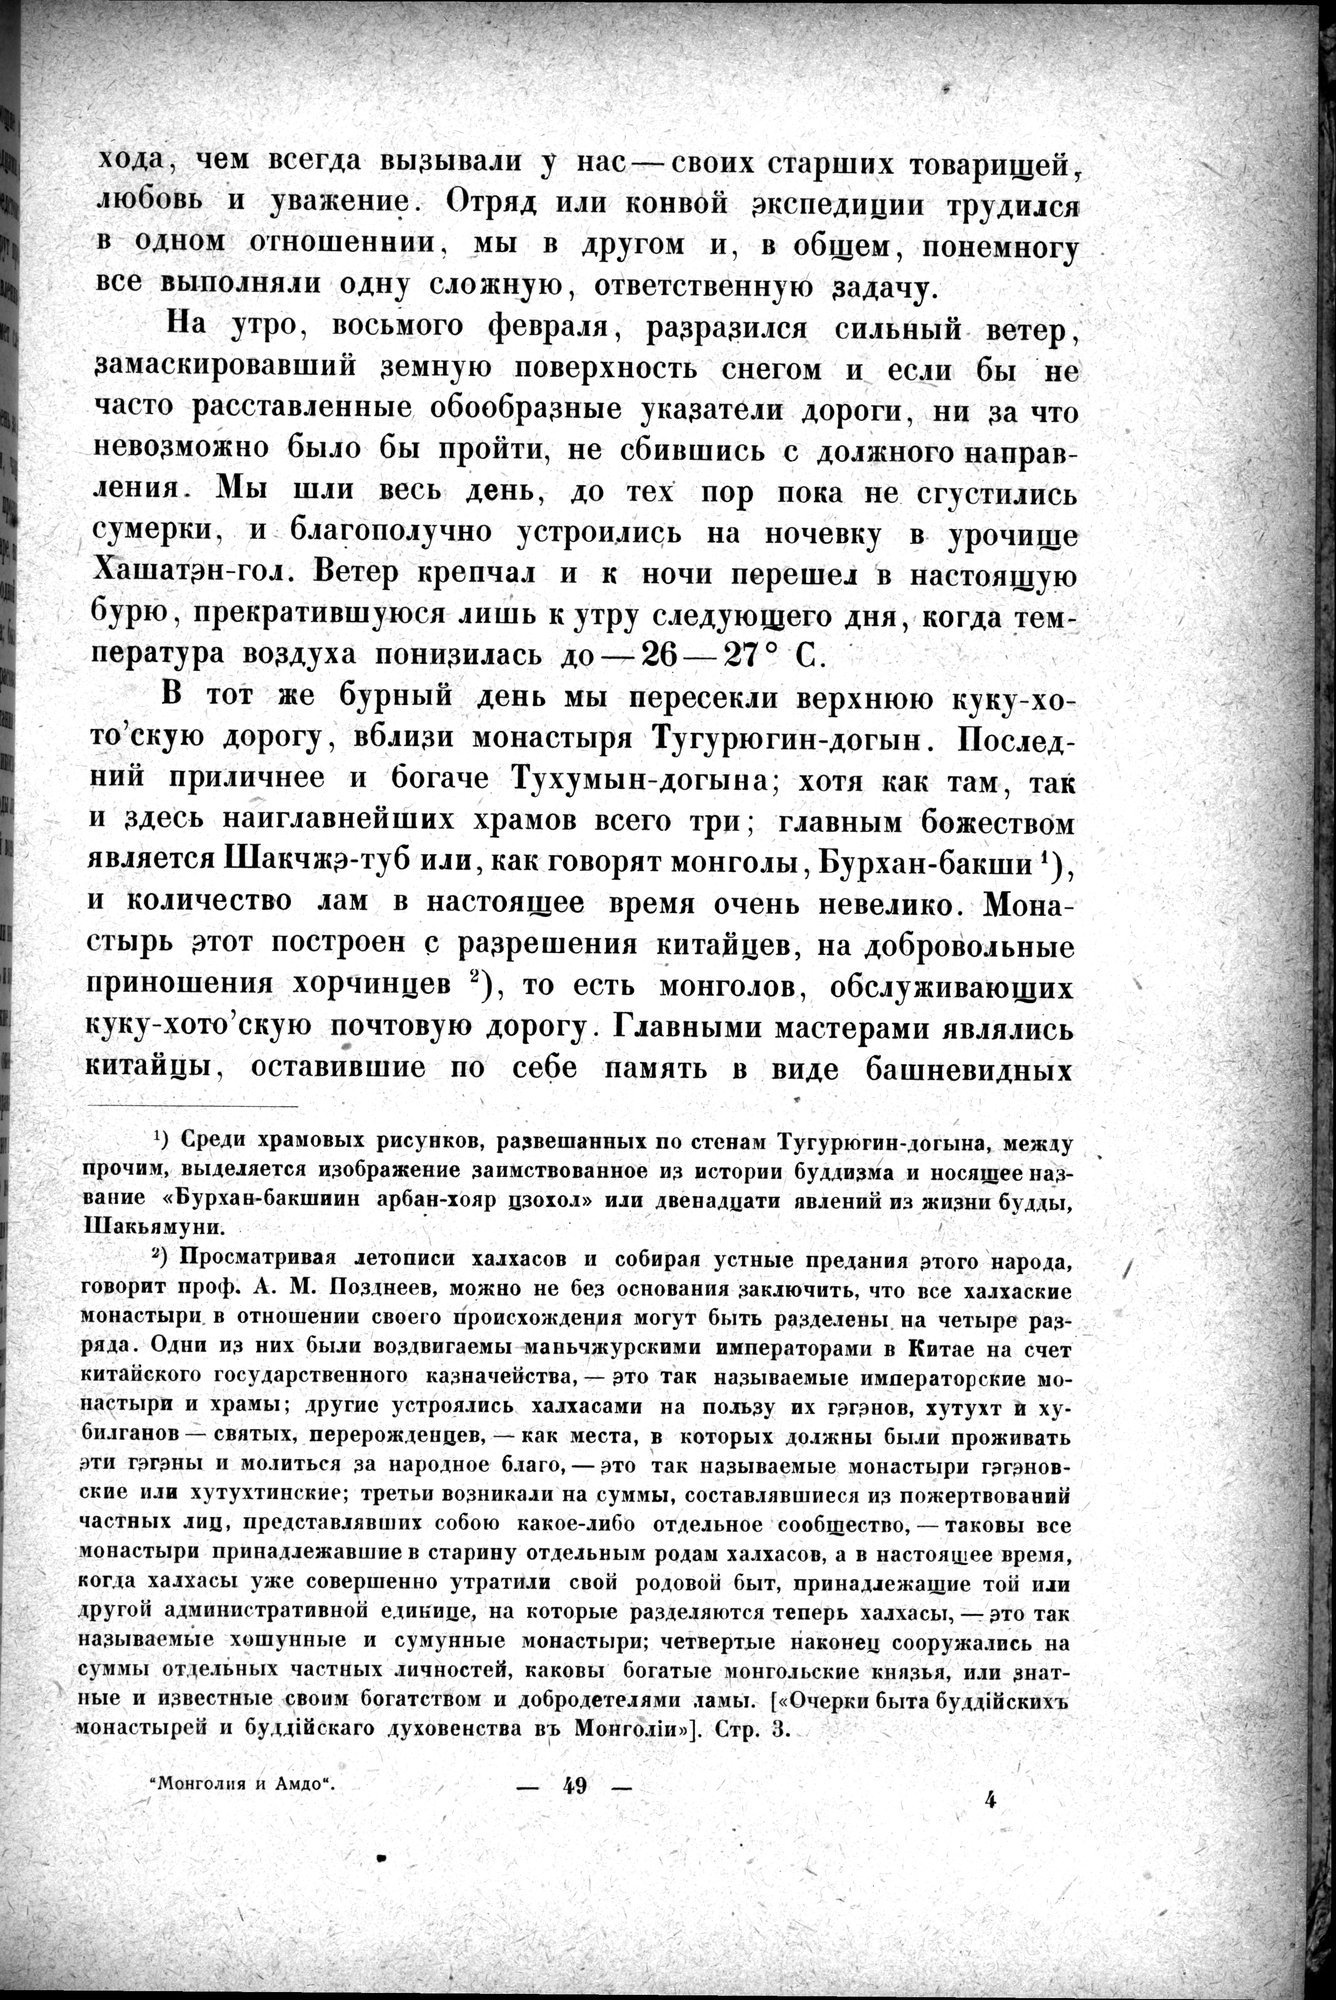 Mongoliya i Amdo i mertby gorod Khara-Khoto : vol.1 / Page 73 (Grayscale High Resolution Image)